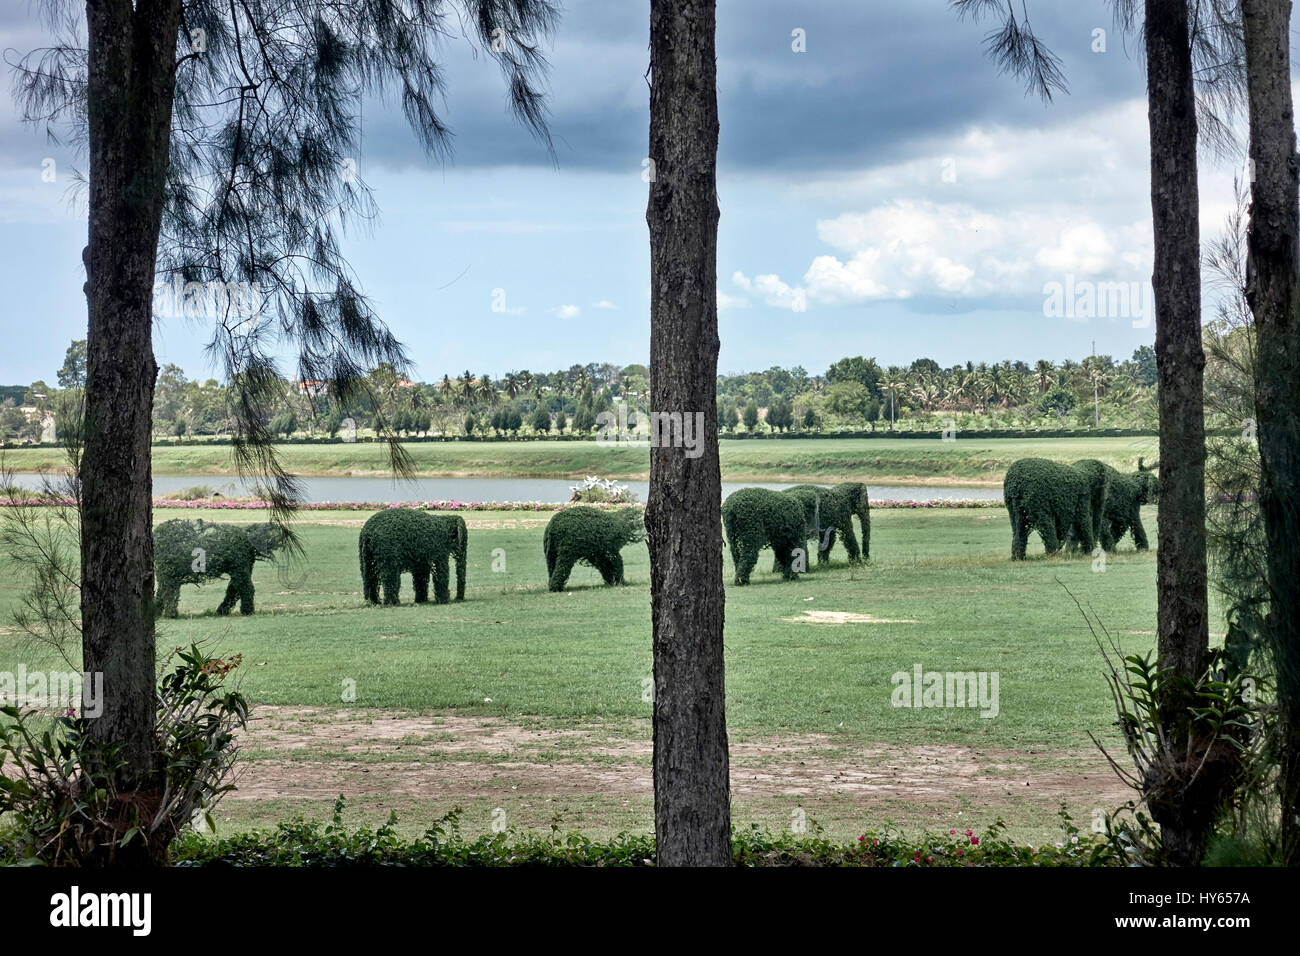 Topiary Thailand elephants. Southeast Asia Stock Photo